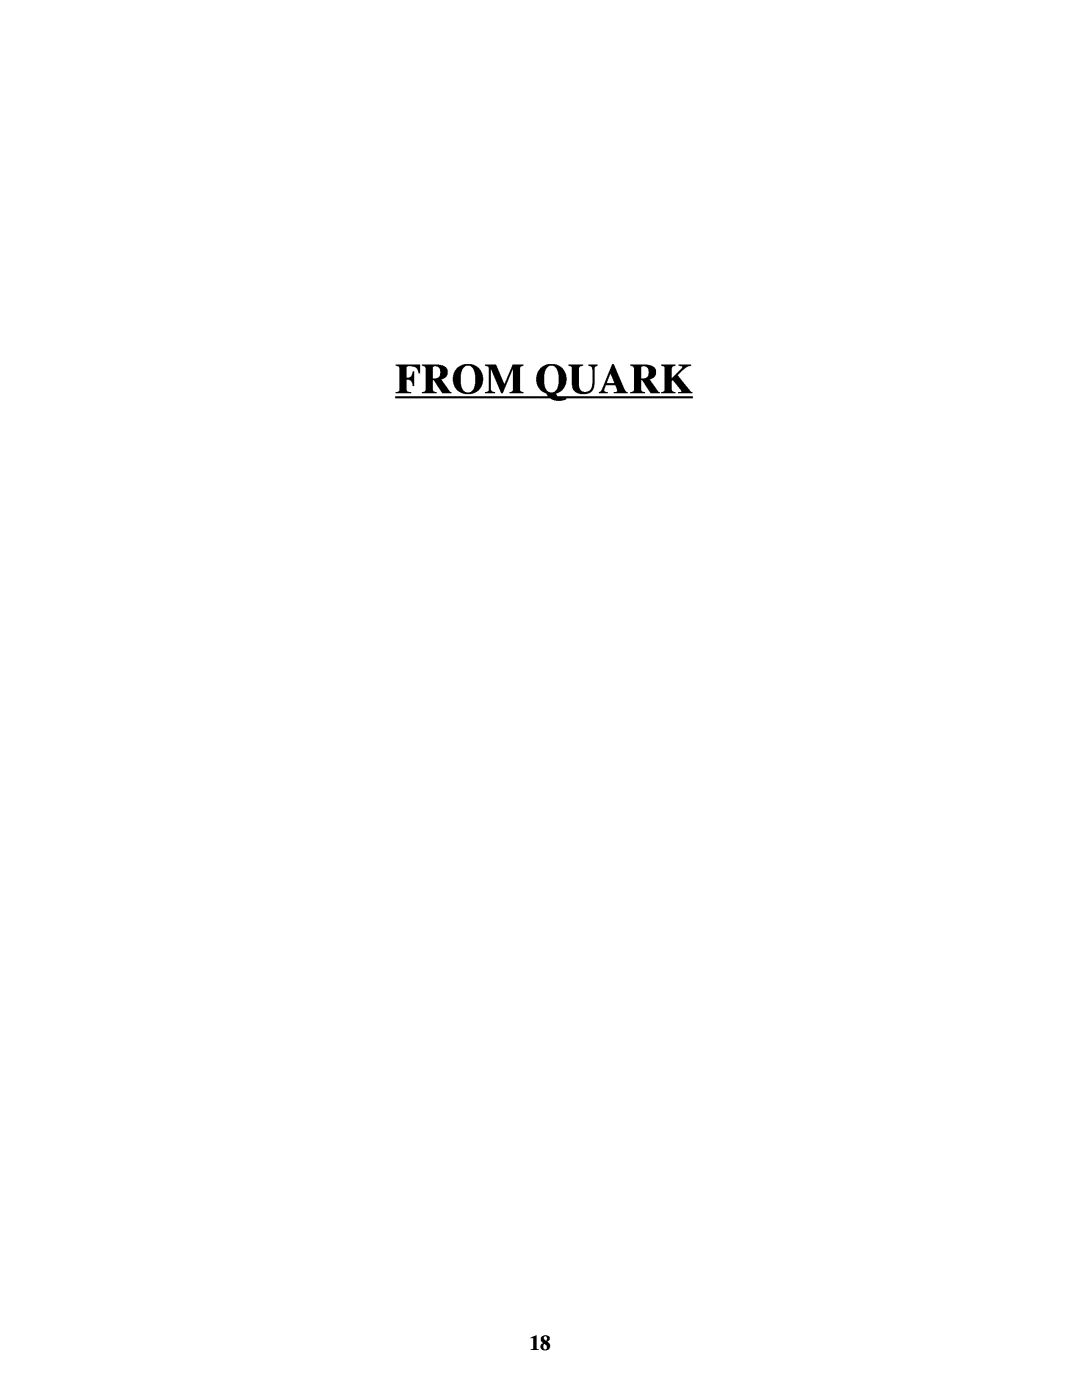 Peavey Q431FX owner manual From Quark 